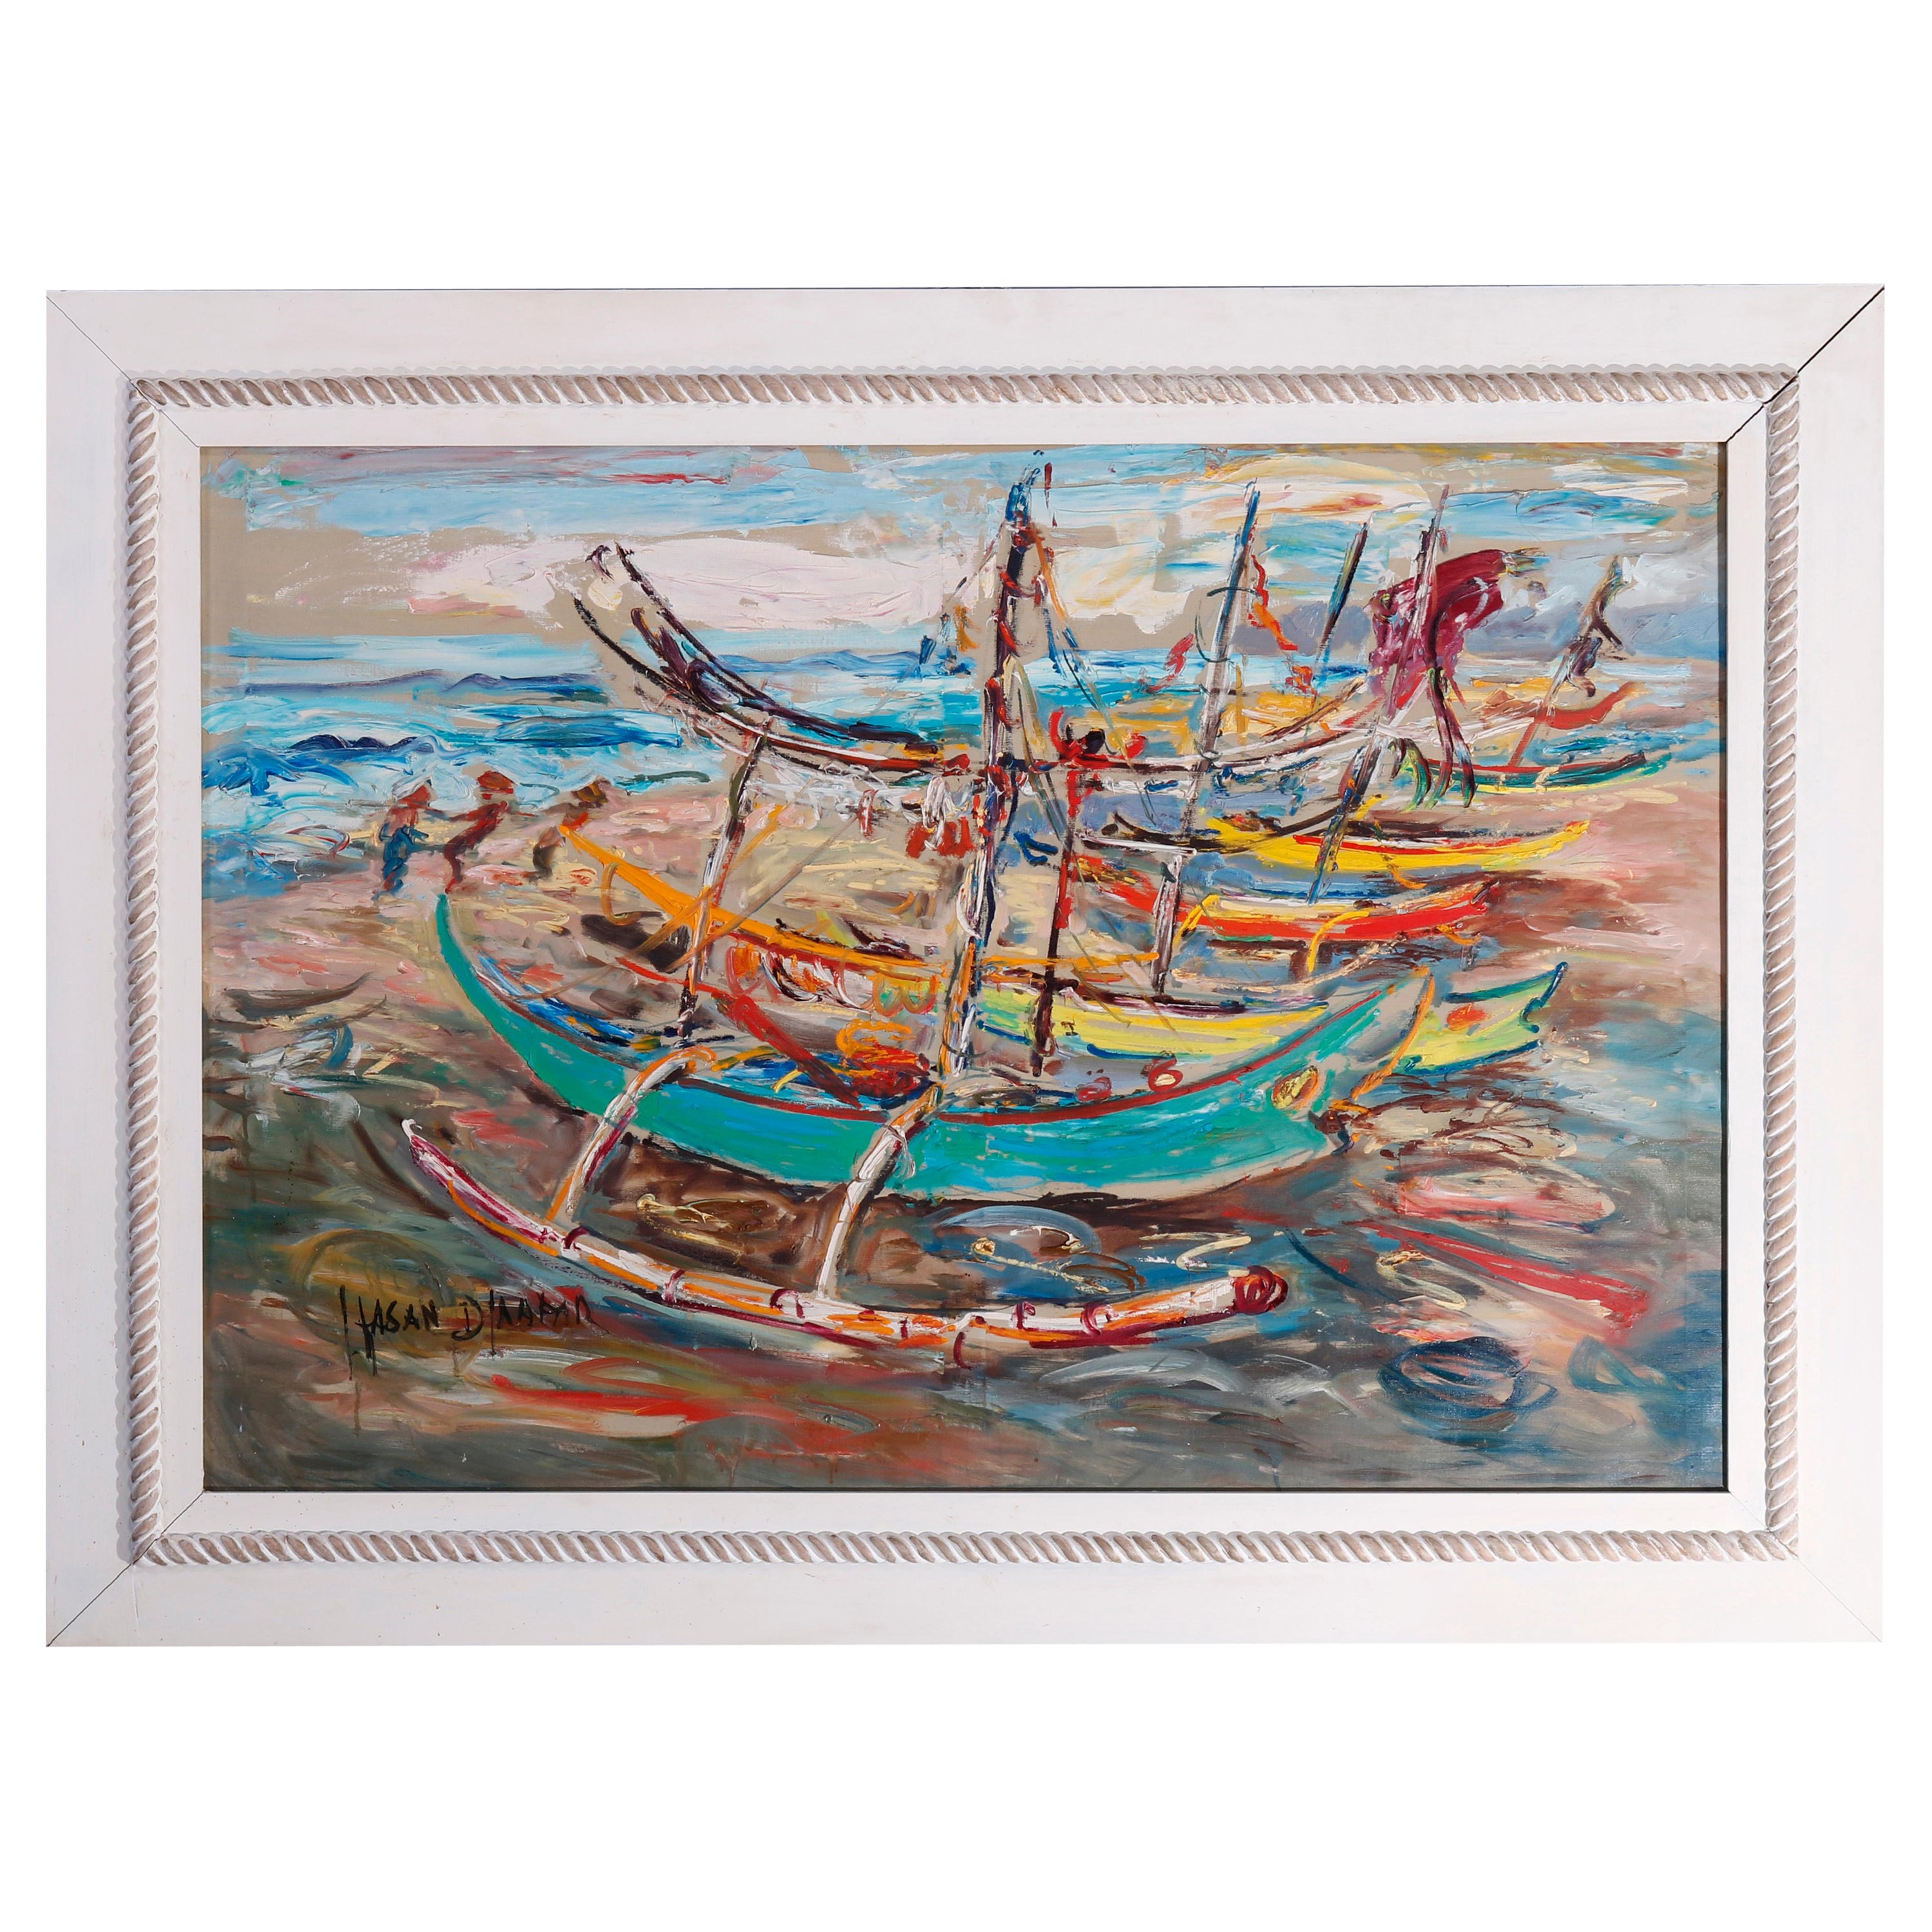 Large Haitian Impressionistic Oil on Canvas Boat Harbor by Has An Djaafar, c1940